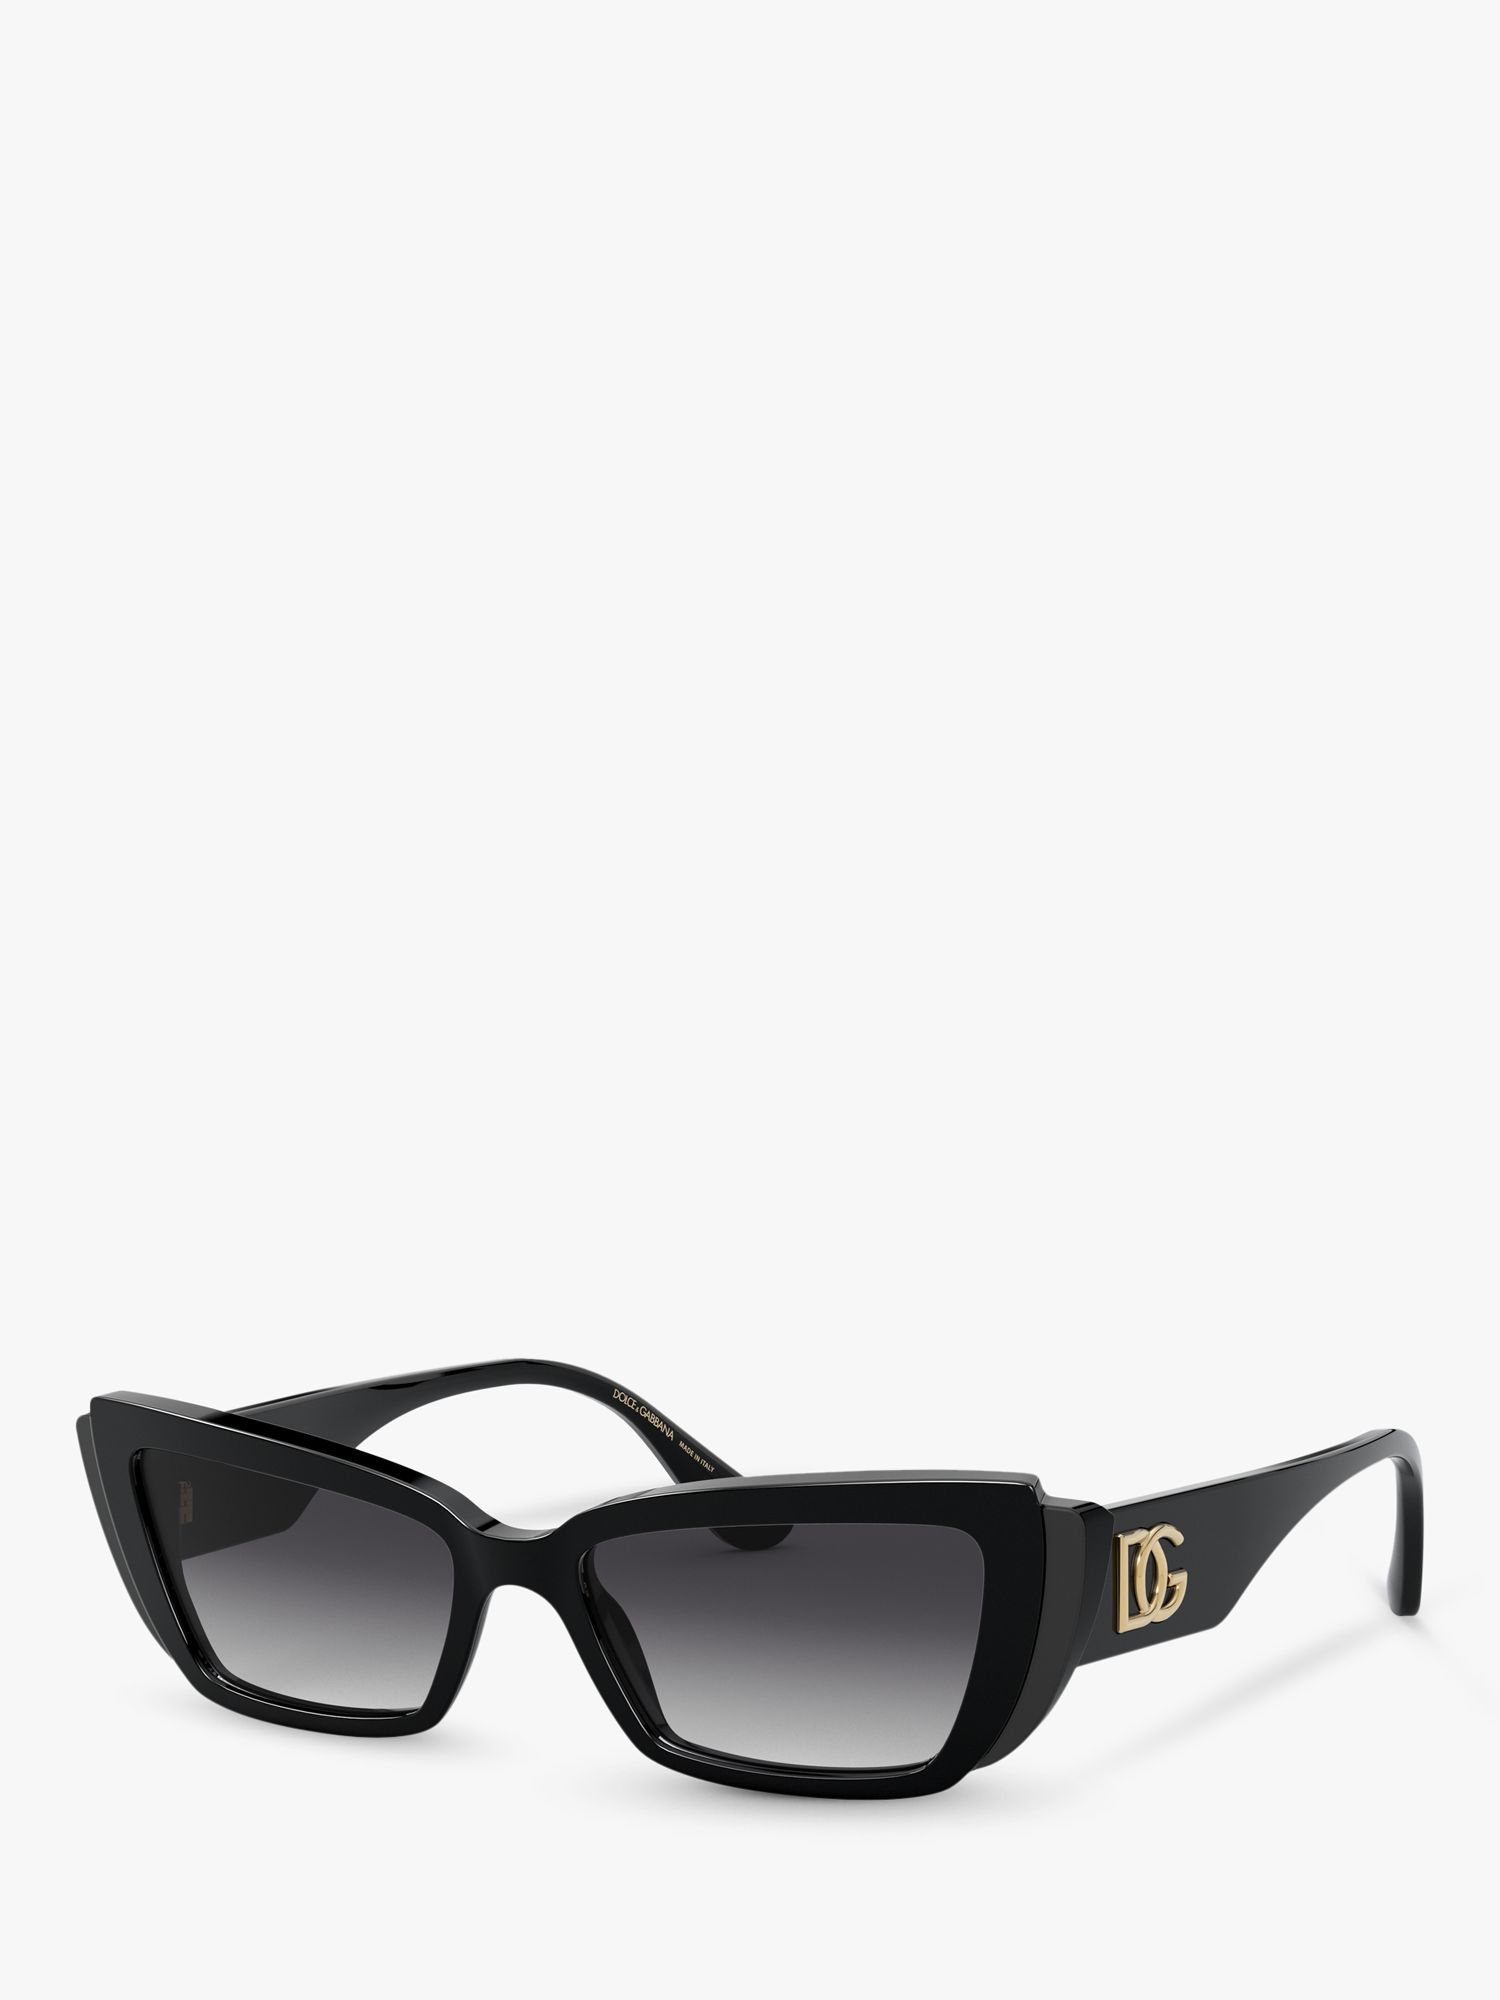 Dolce & Gabbana DG4382 Women's Rectangular Sunglasses, Black/Light Grey  Gradient